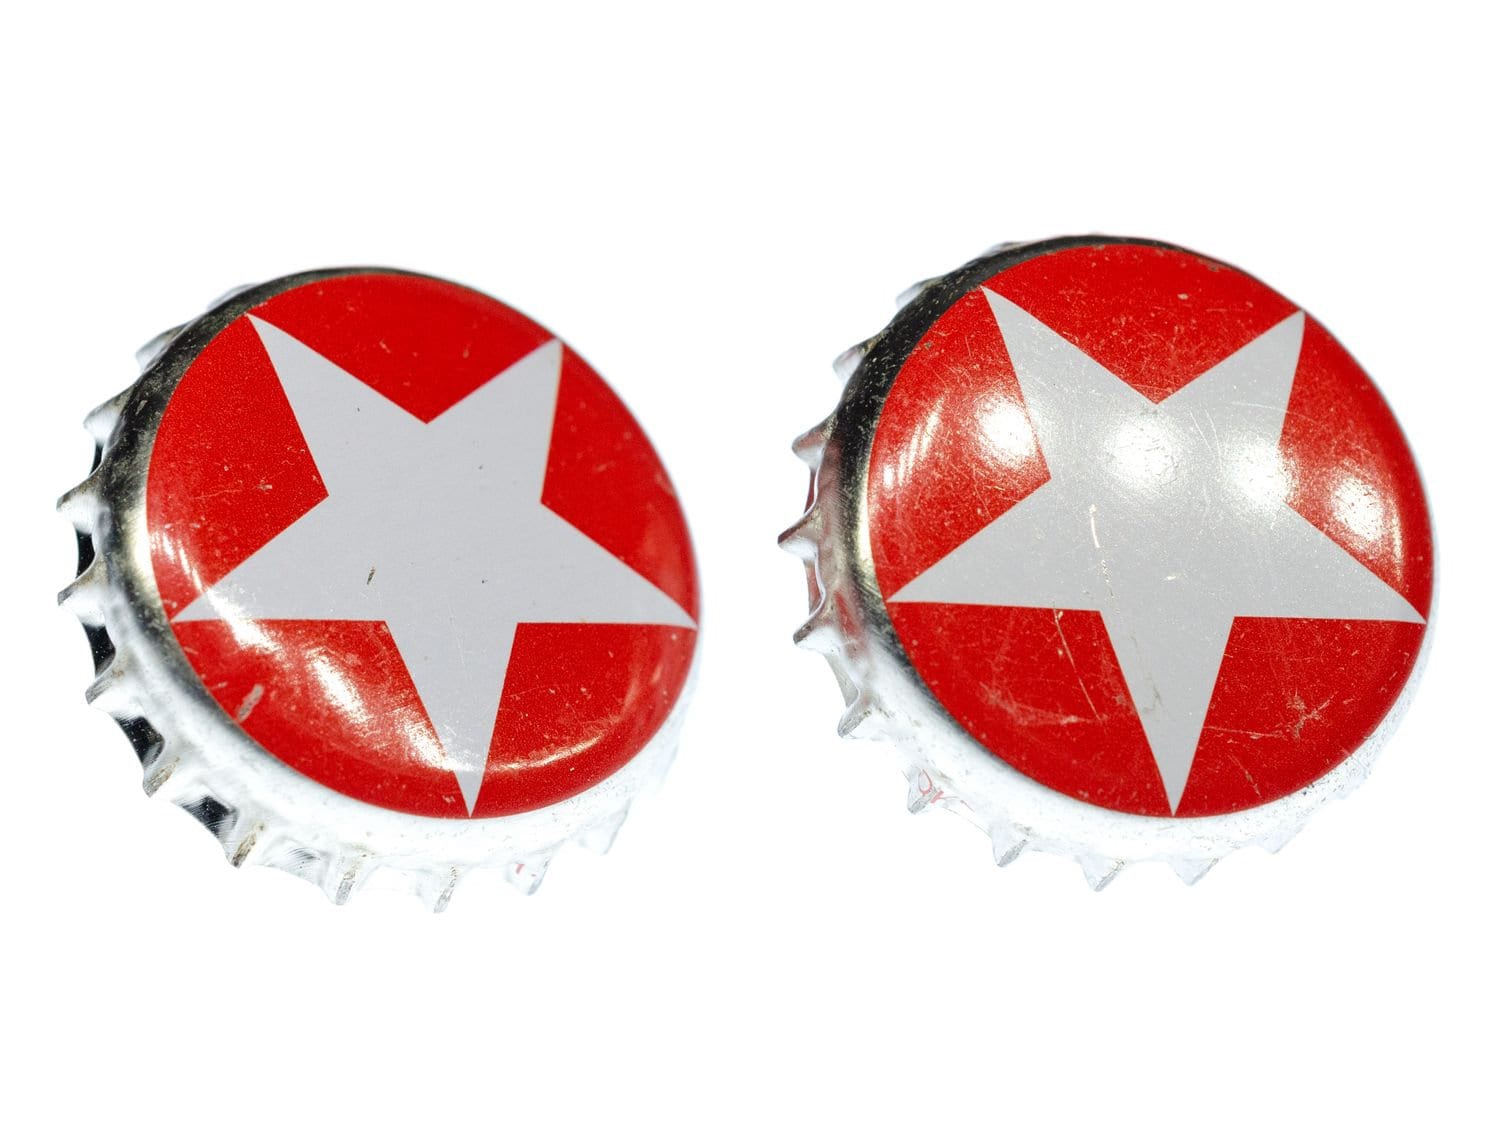 Kronkorken Sterni Manschettenknöpfe Miniblings Knöpfe + Box Bier Roter Stern von Miniblings